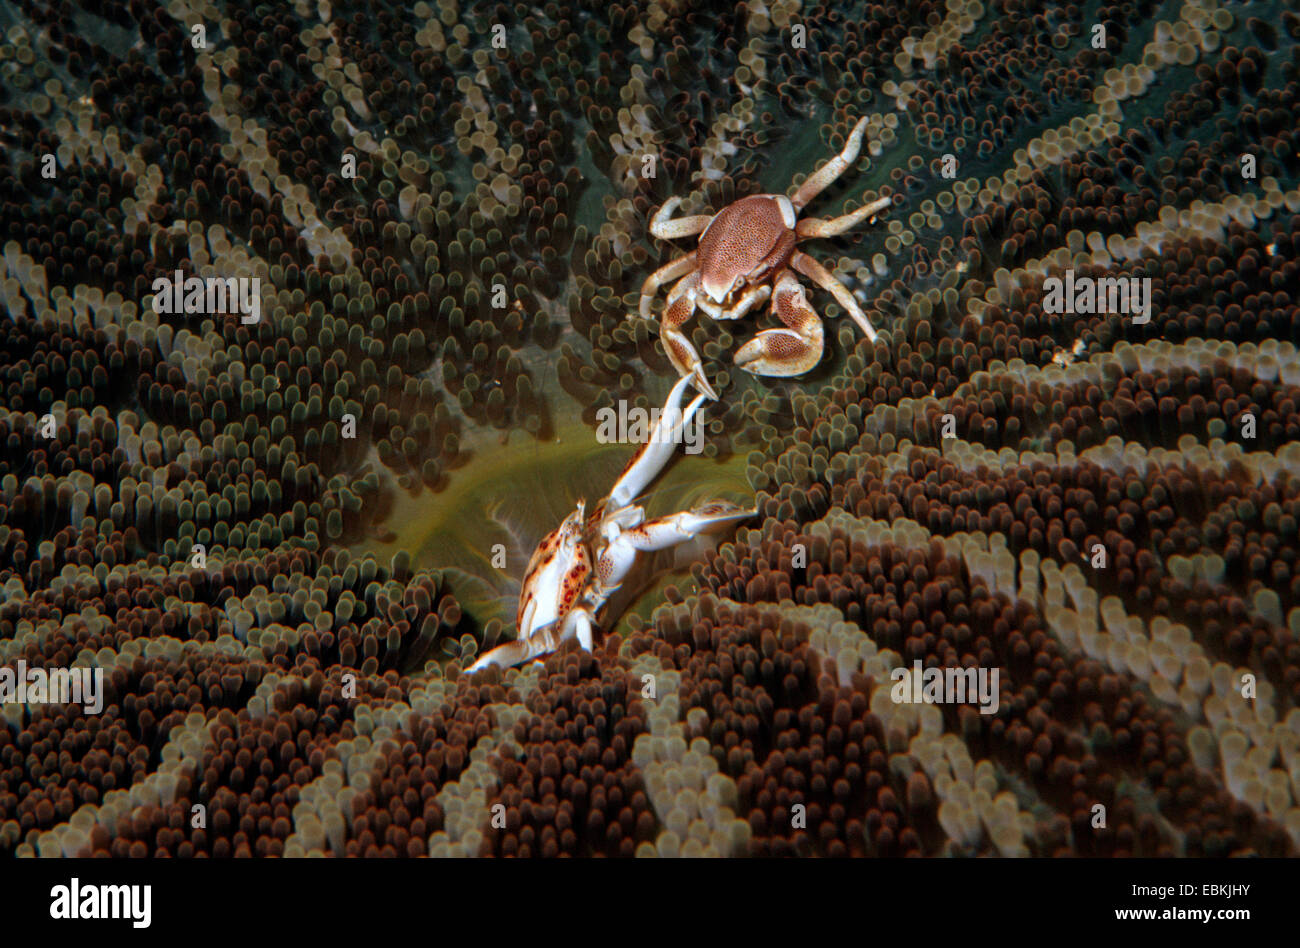 Porcelain Crab (Neopetrolisthes maculatus, Neopetrolisthes oshimai), fighting on an sea anemone, Philippines Stock Photo